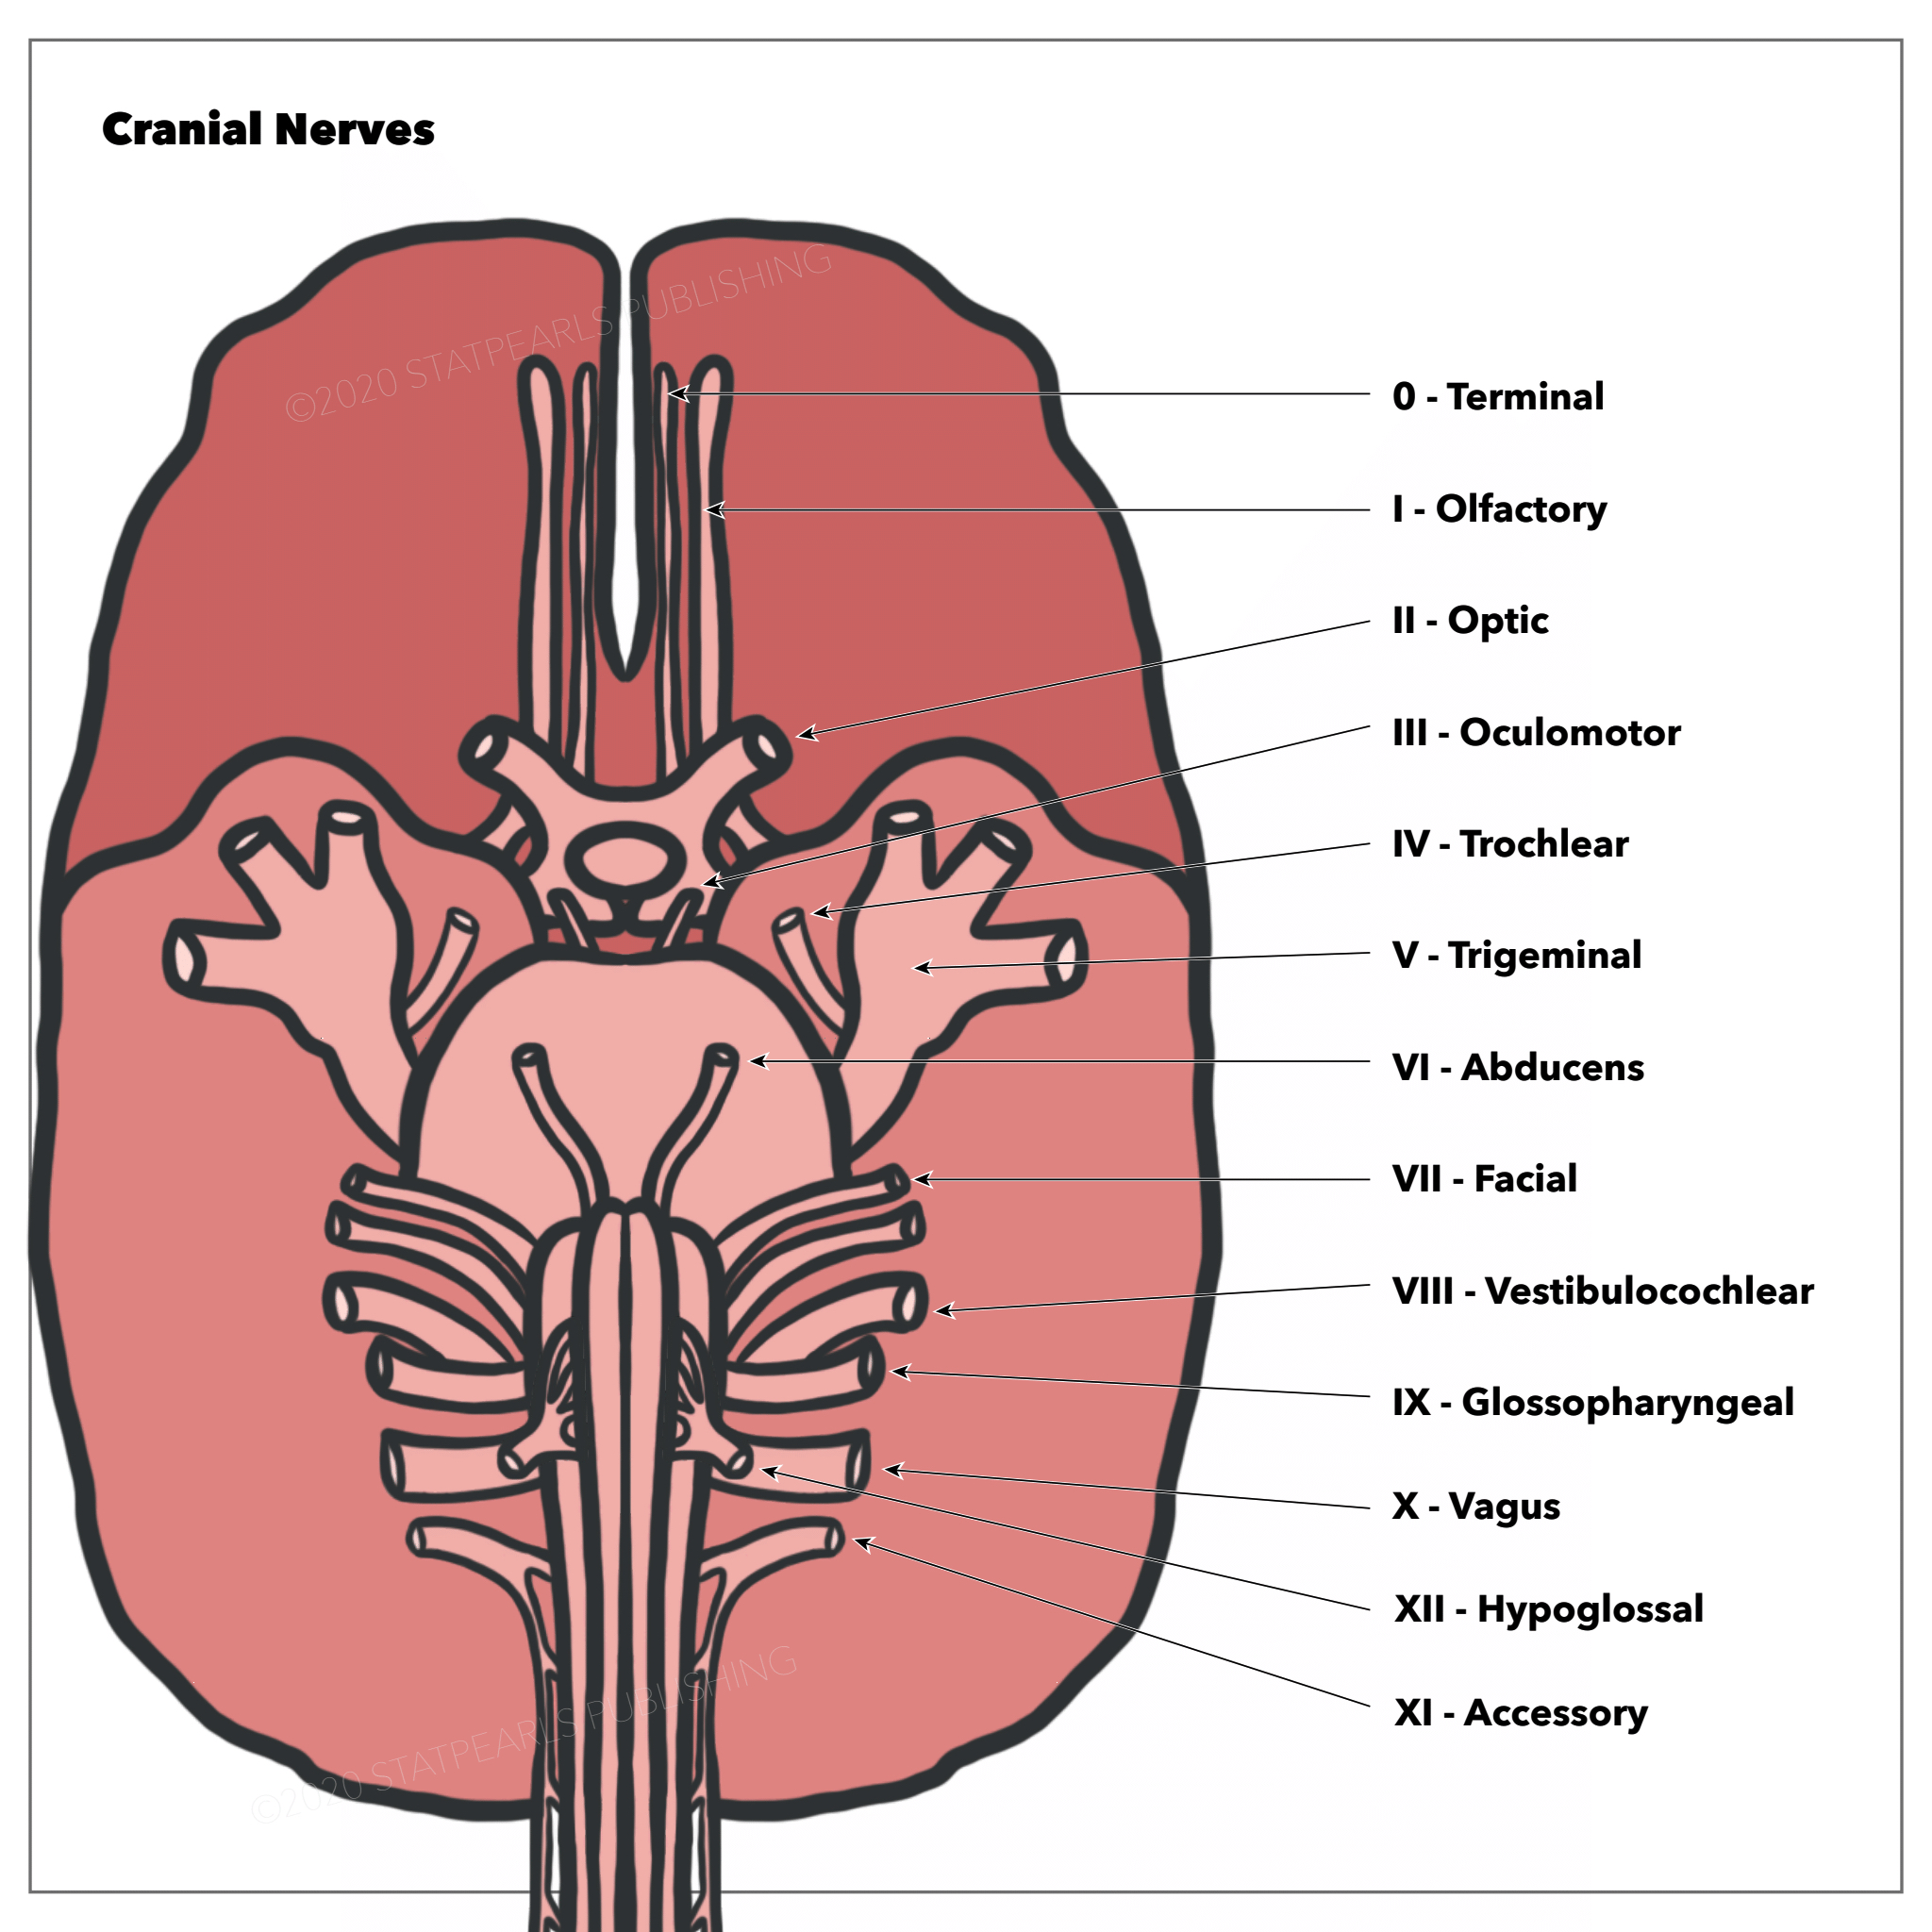 Cranial Nerves, Terminal, Olfactory, Optic, Oculomotor, Trochlear, Trigeminal, Abducens, Facial, Vestibulocochlear, Glossopharyngeal, Vagus, Hypoglossal